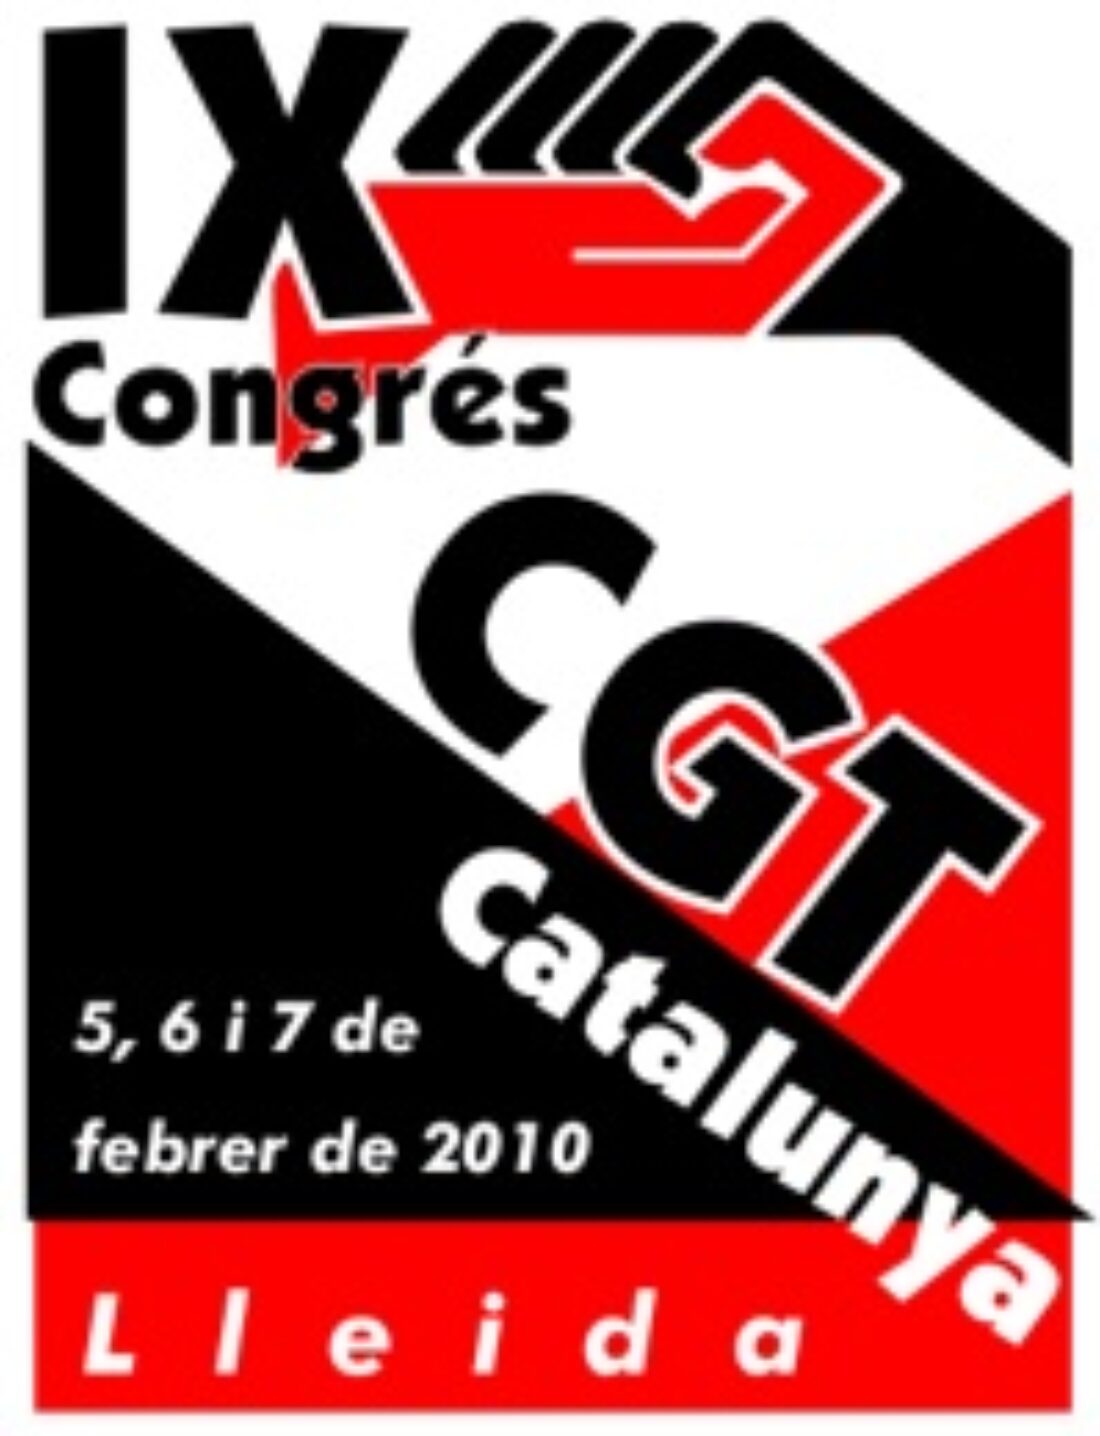 5 al 7 febrero, Lleida : IX Congreso de la CGT de Catalunya